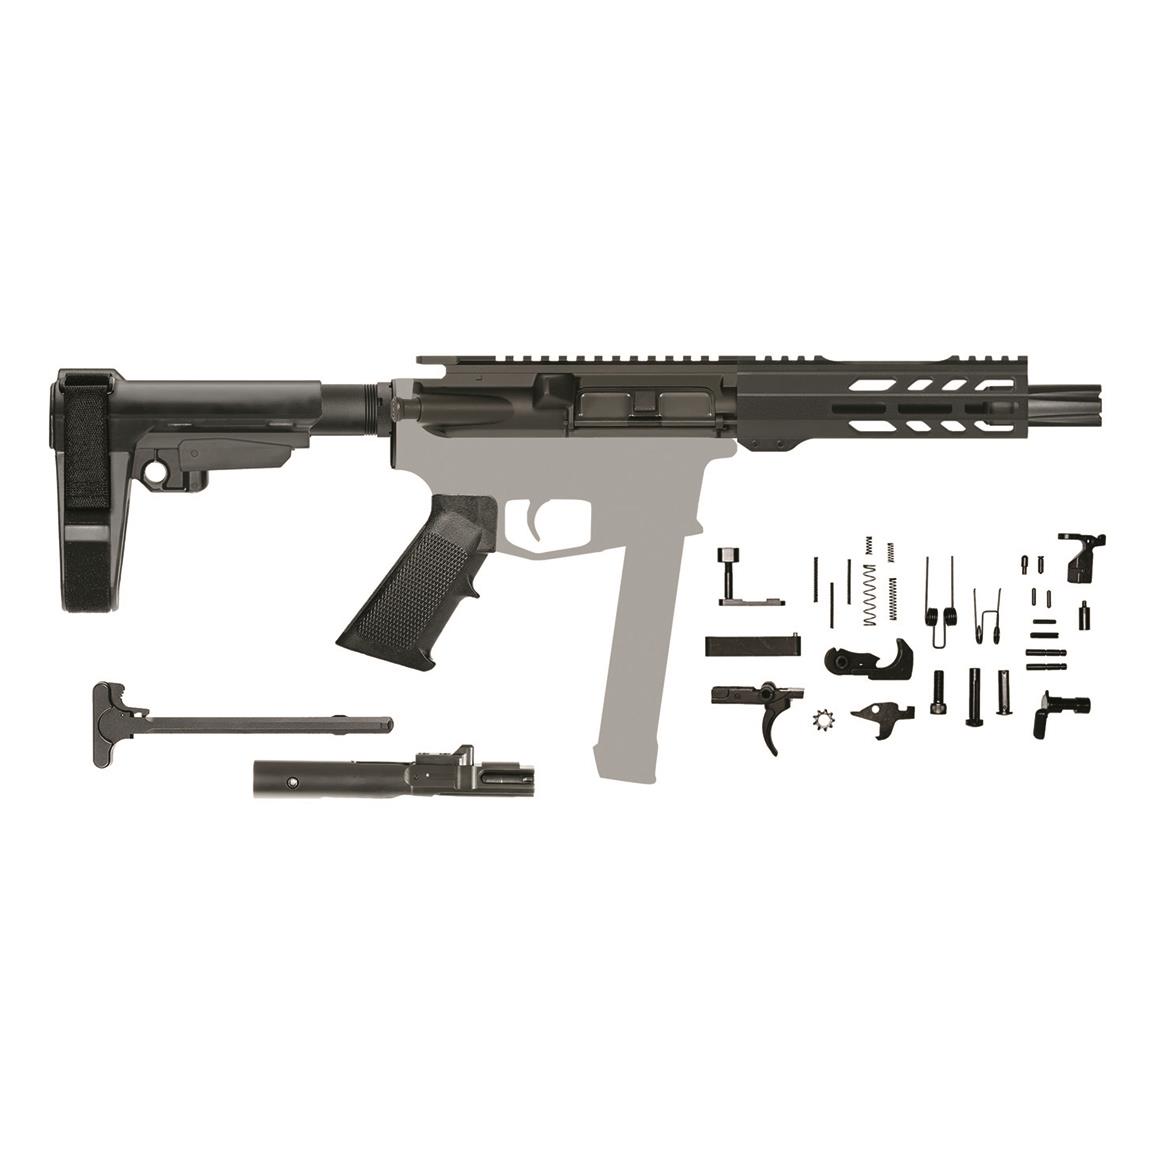 CBC AR-15 Pistol Kit, Semi-automatic, 9mm, 7.5" Barrel, SBA3 Brace, No Stripped Lower or Magazine